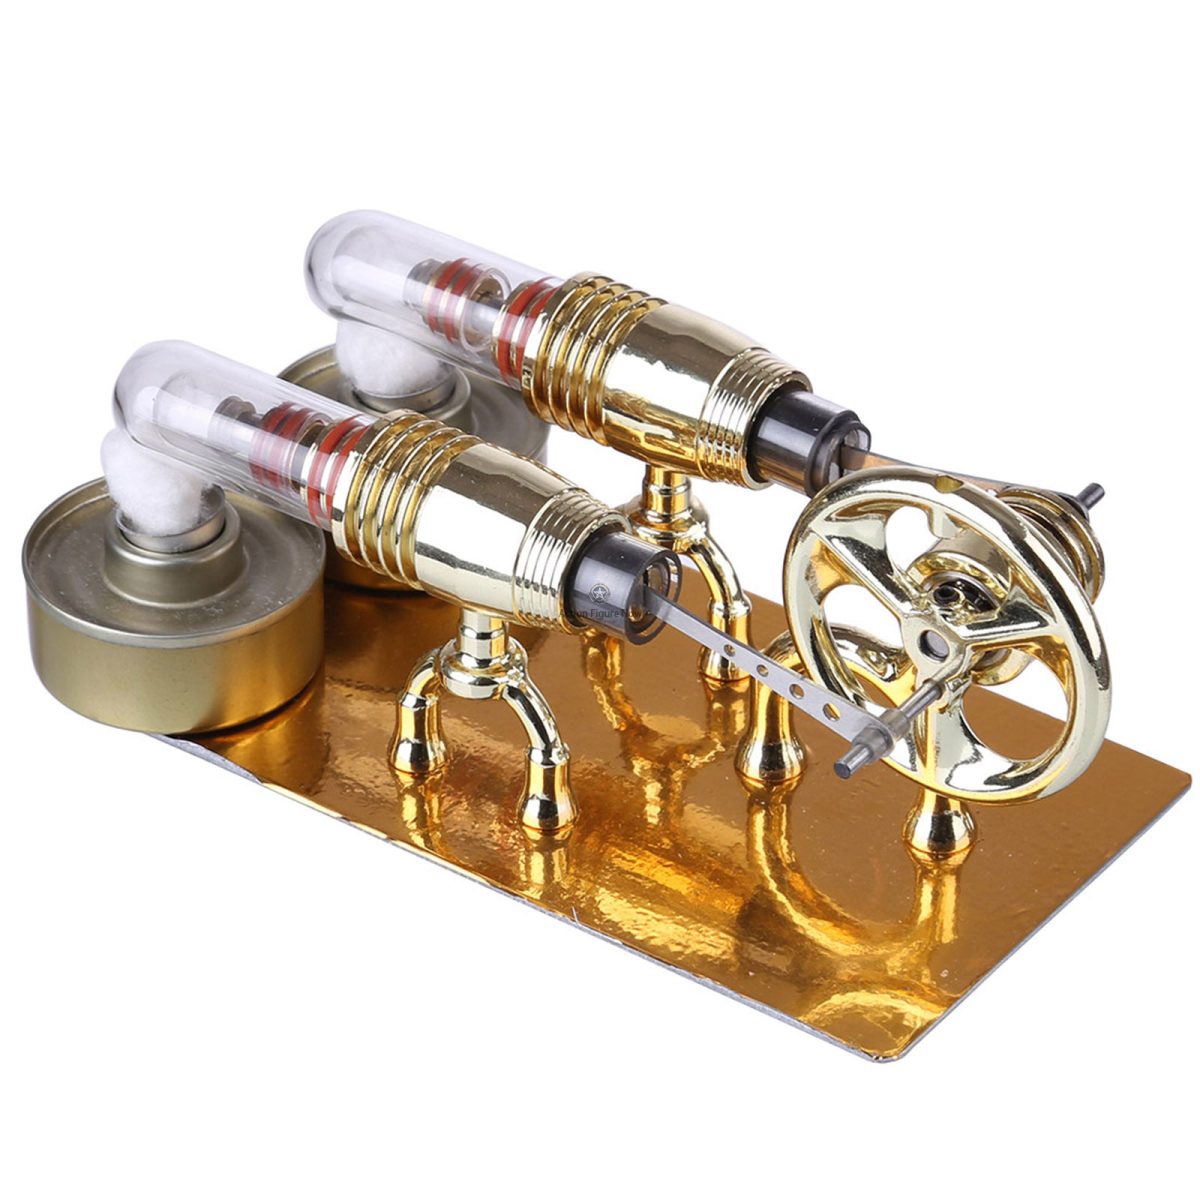 2 Cylinder Stirling Engine Model - STEM | Science Educational Toy | Science Project Kit